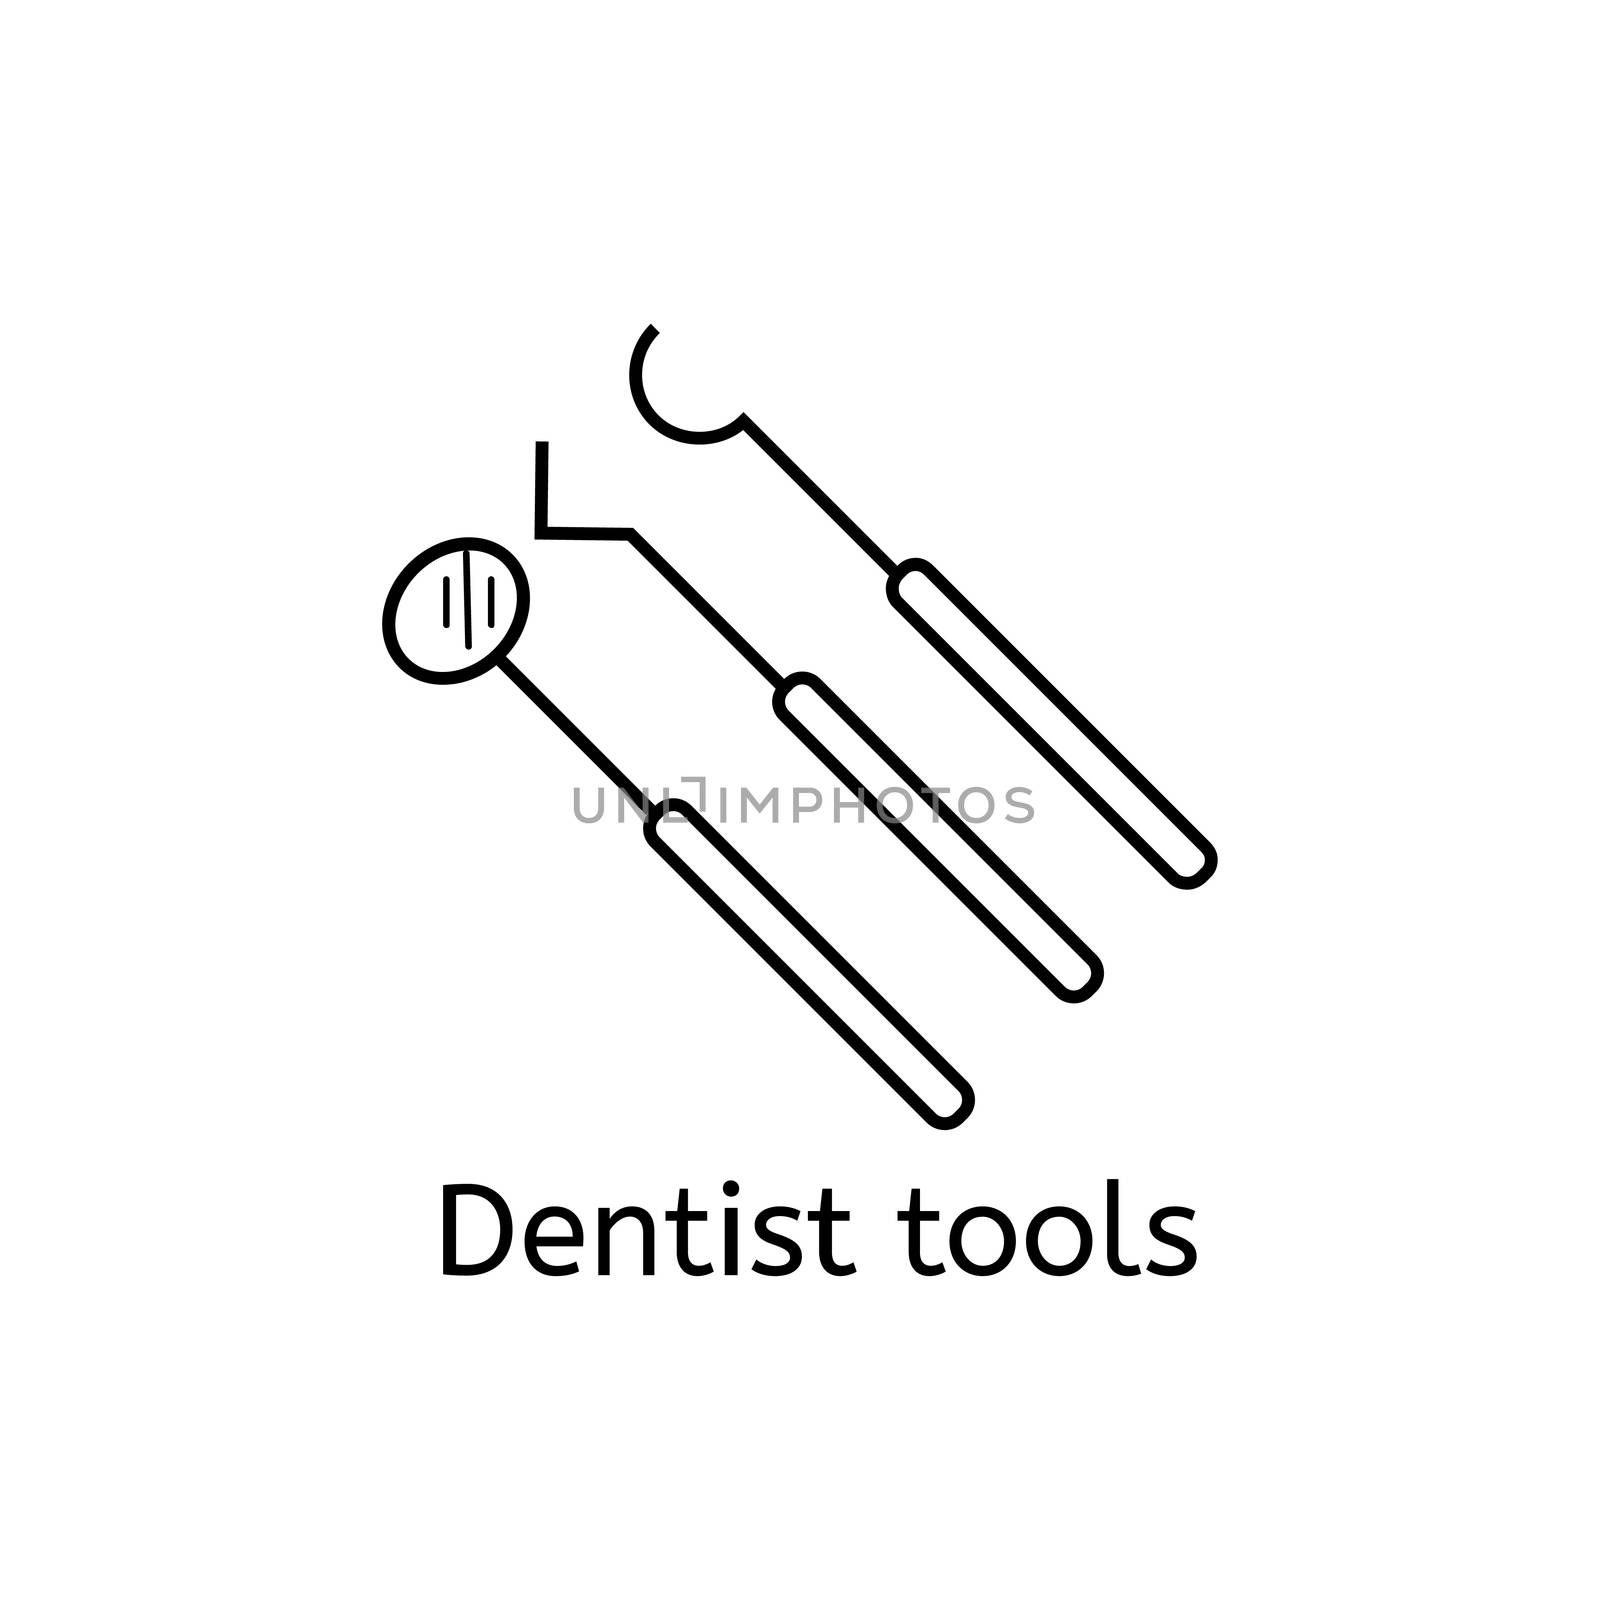 Dental Instrument icon set isolated on white background.